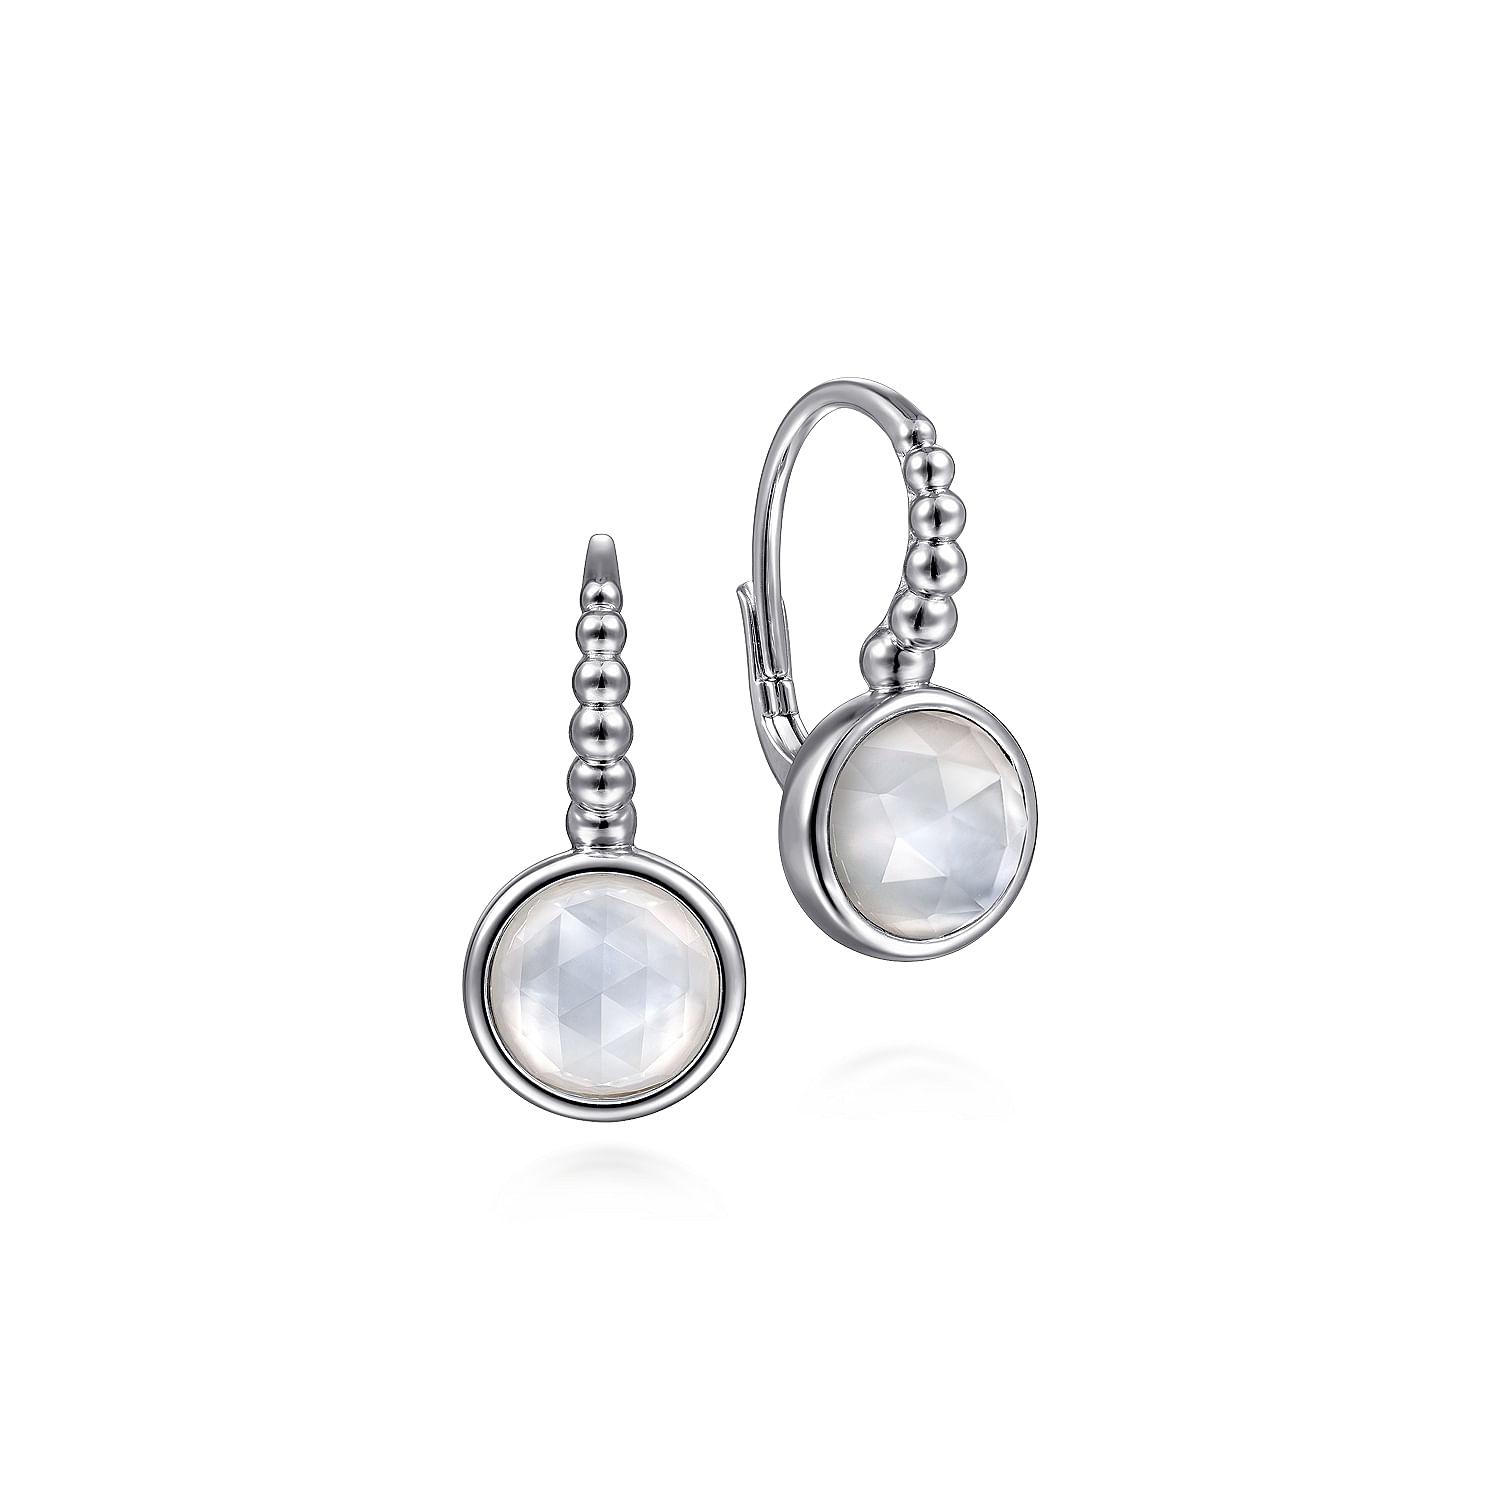 925 Sterling Silver Bujukan Rock Crystal and White MOP Leverback Earrings